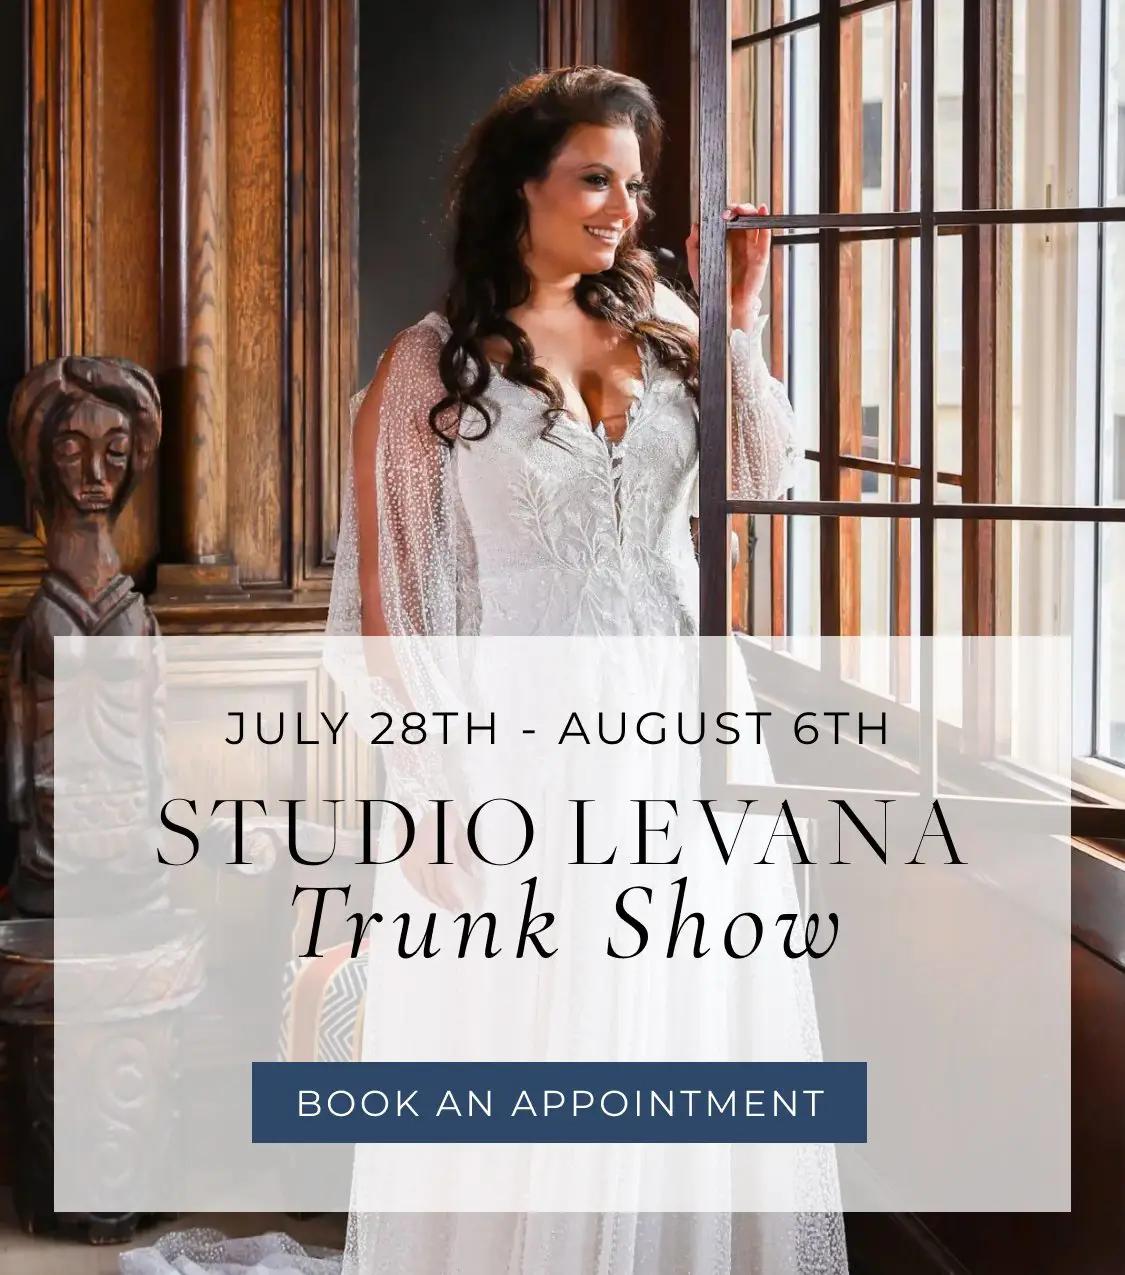 "Studio Levana Trunk Show" banner for mobile